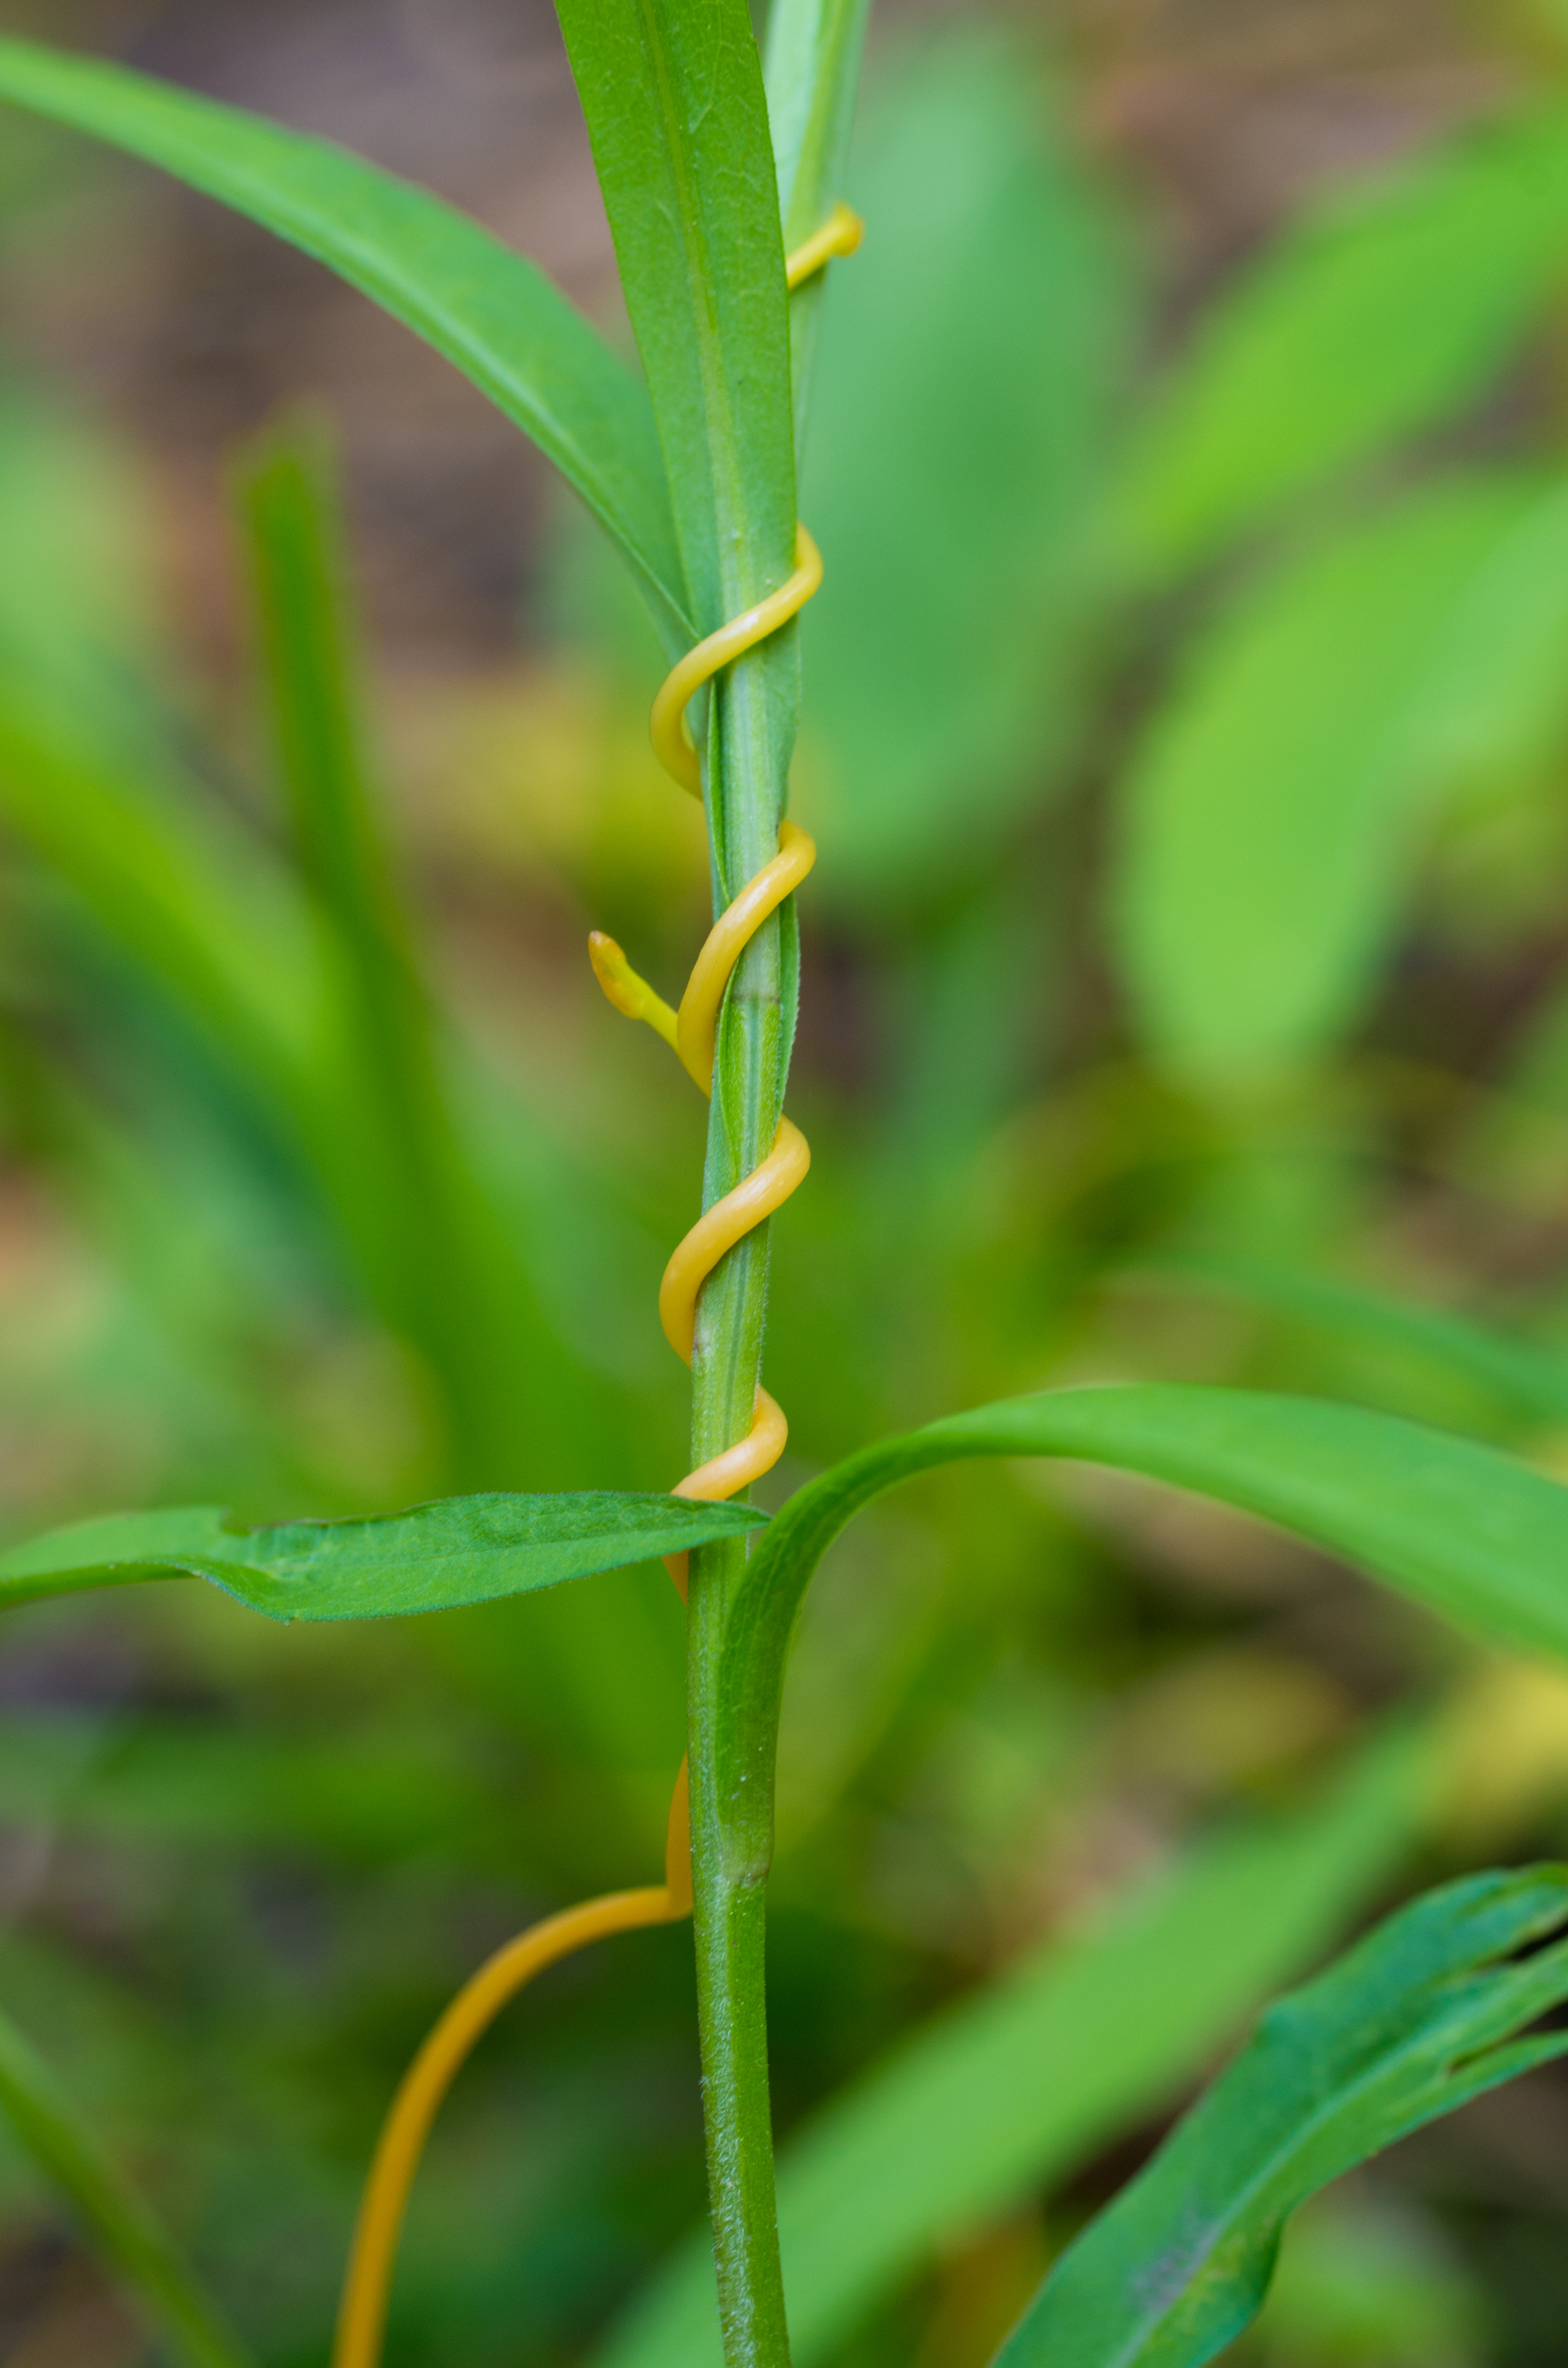 Floraform – an exploration of differential growth | Nervous System blog